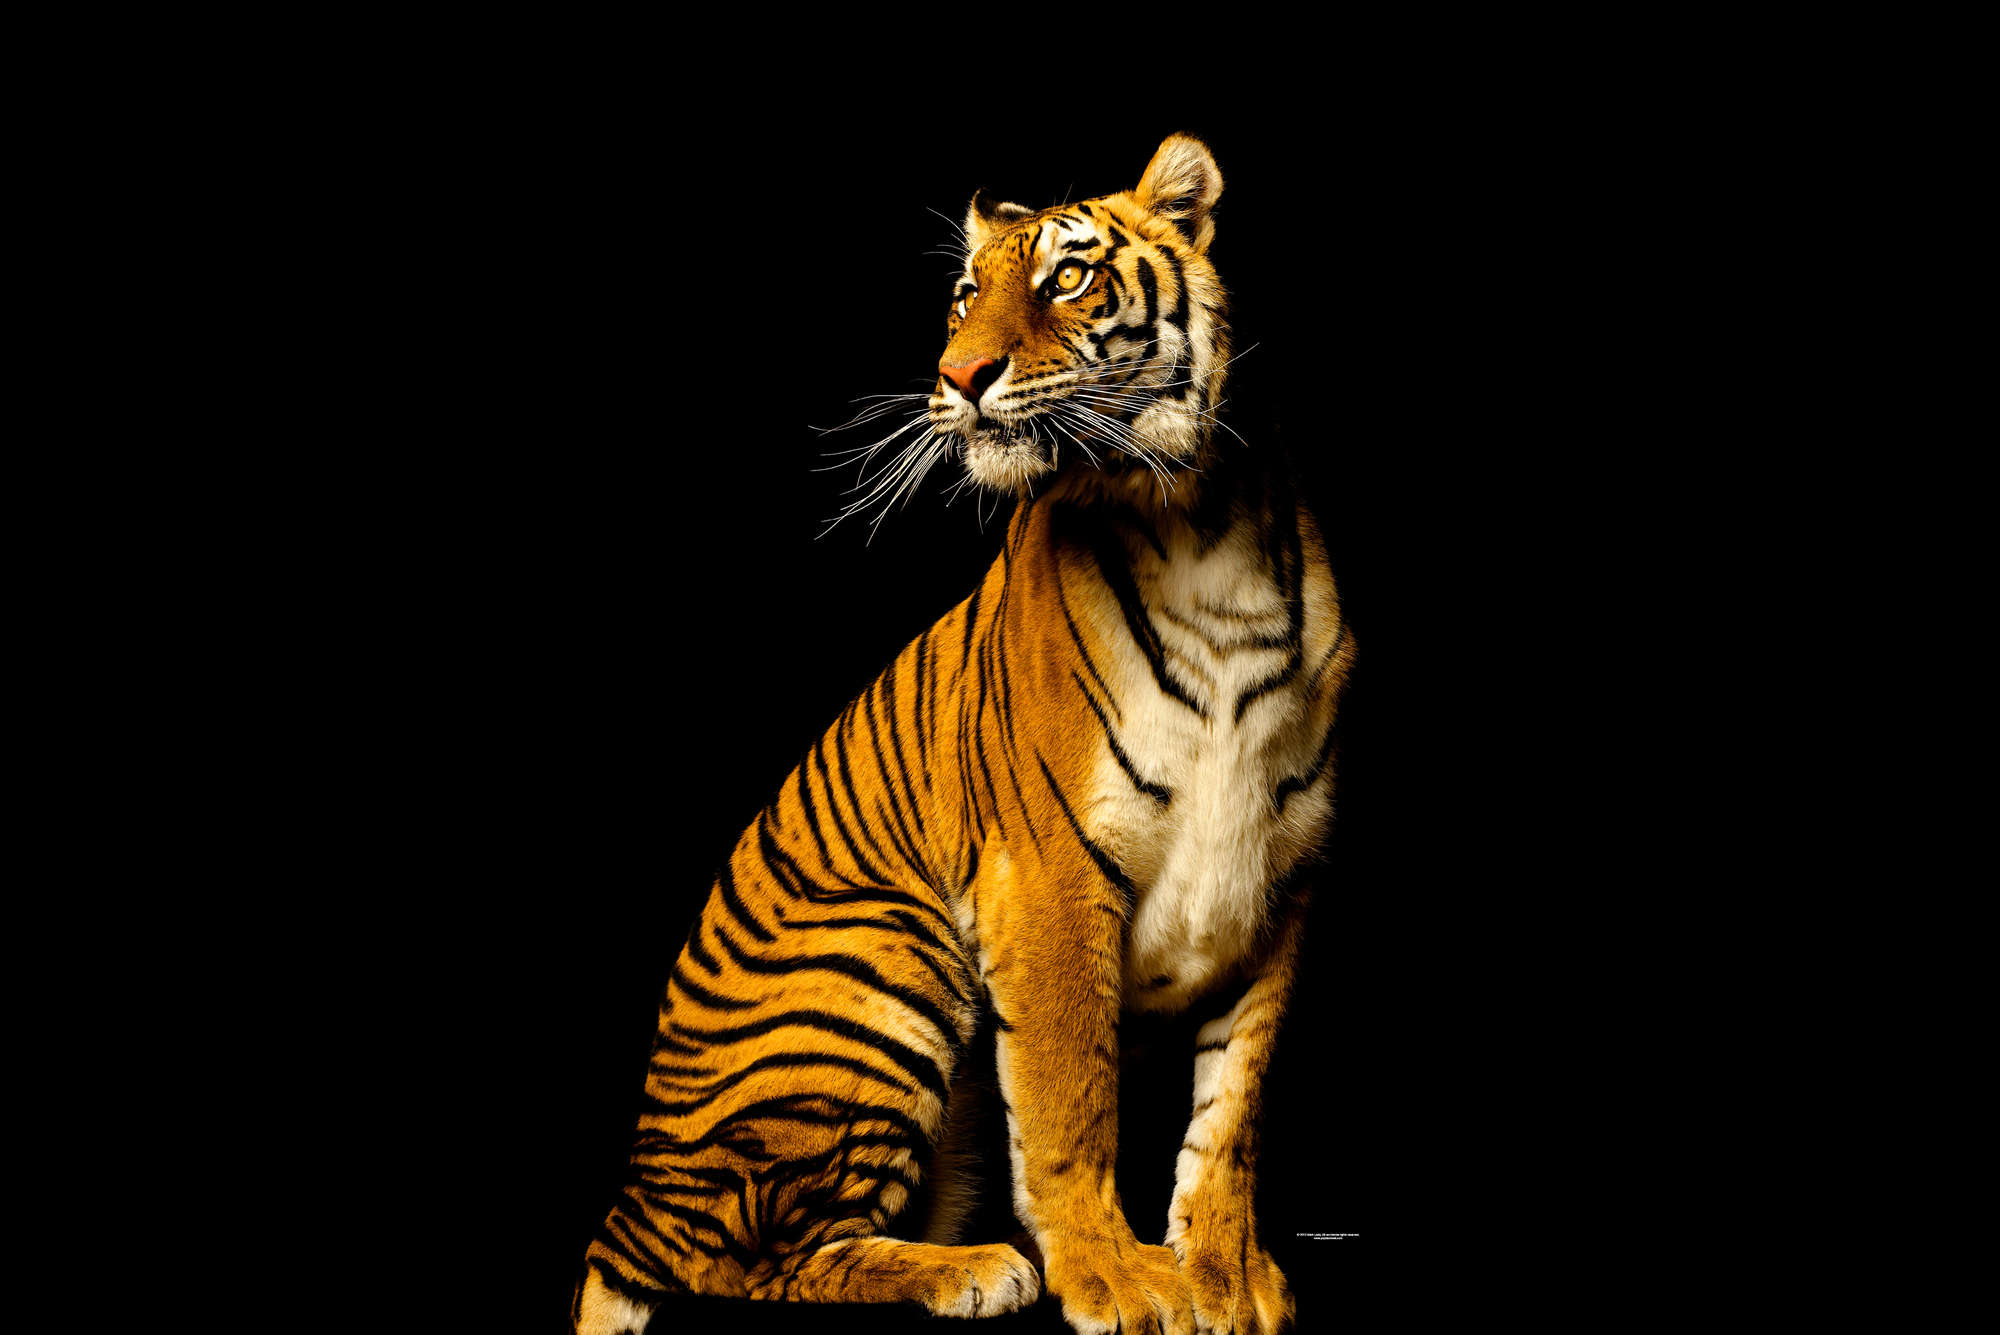             Tigre sentado - fondo de pantalla con retrato de animales
        